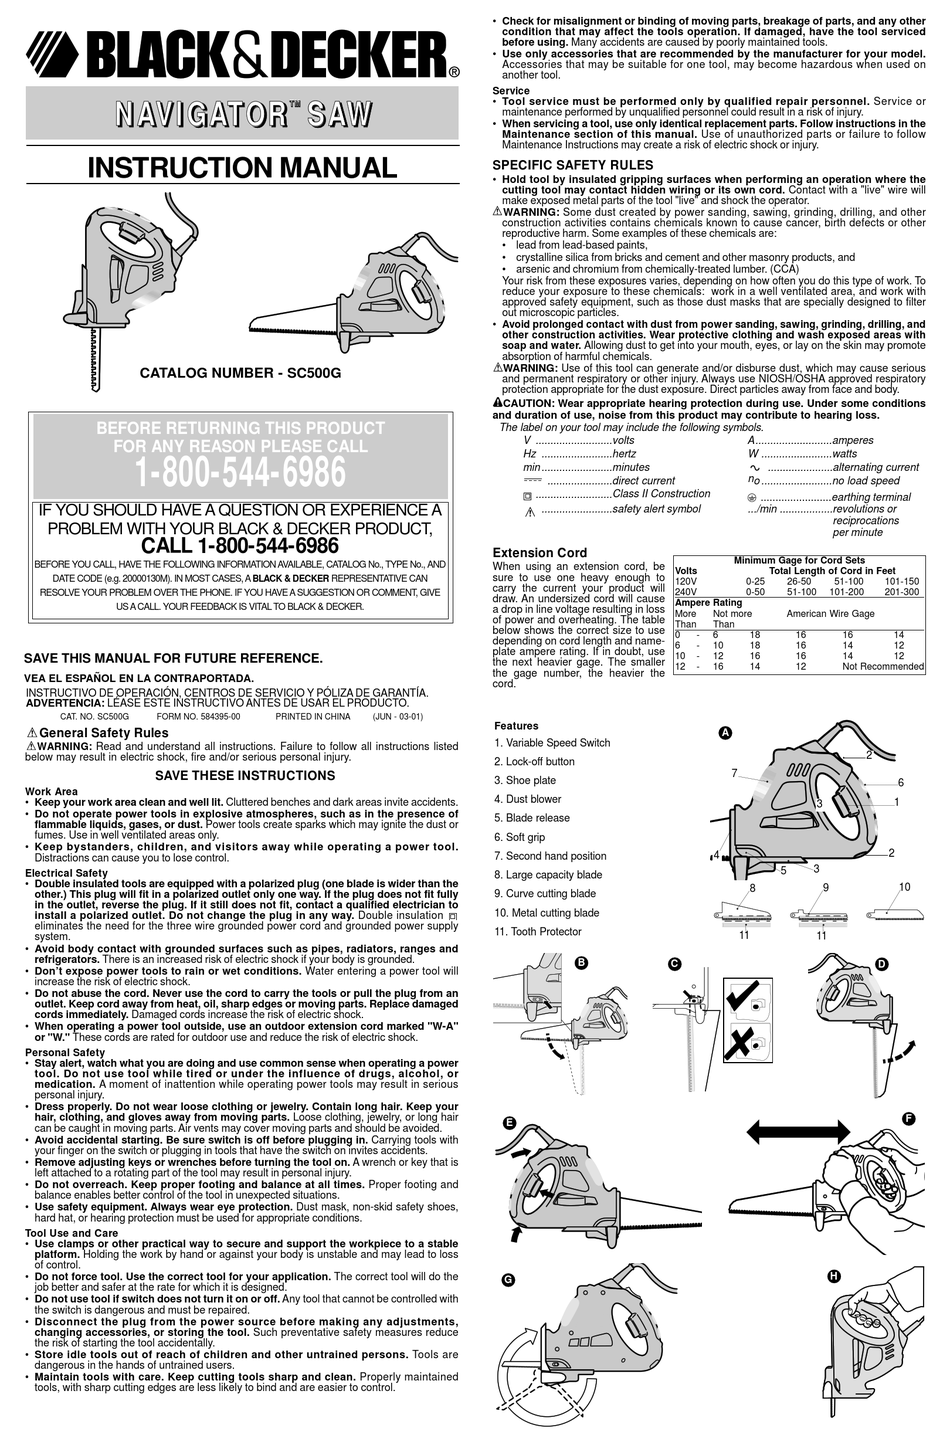 User manual Black & Decker EK500 (English - 12 pages)